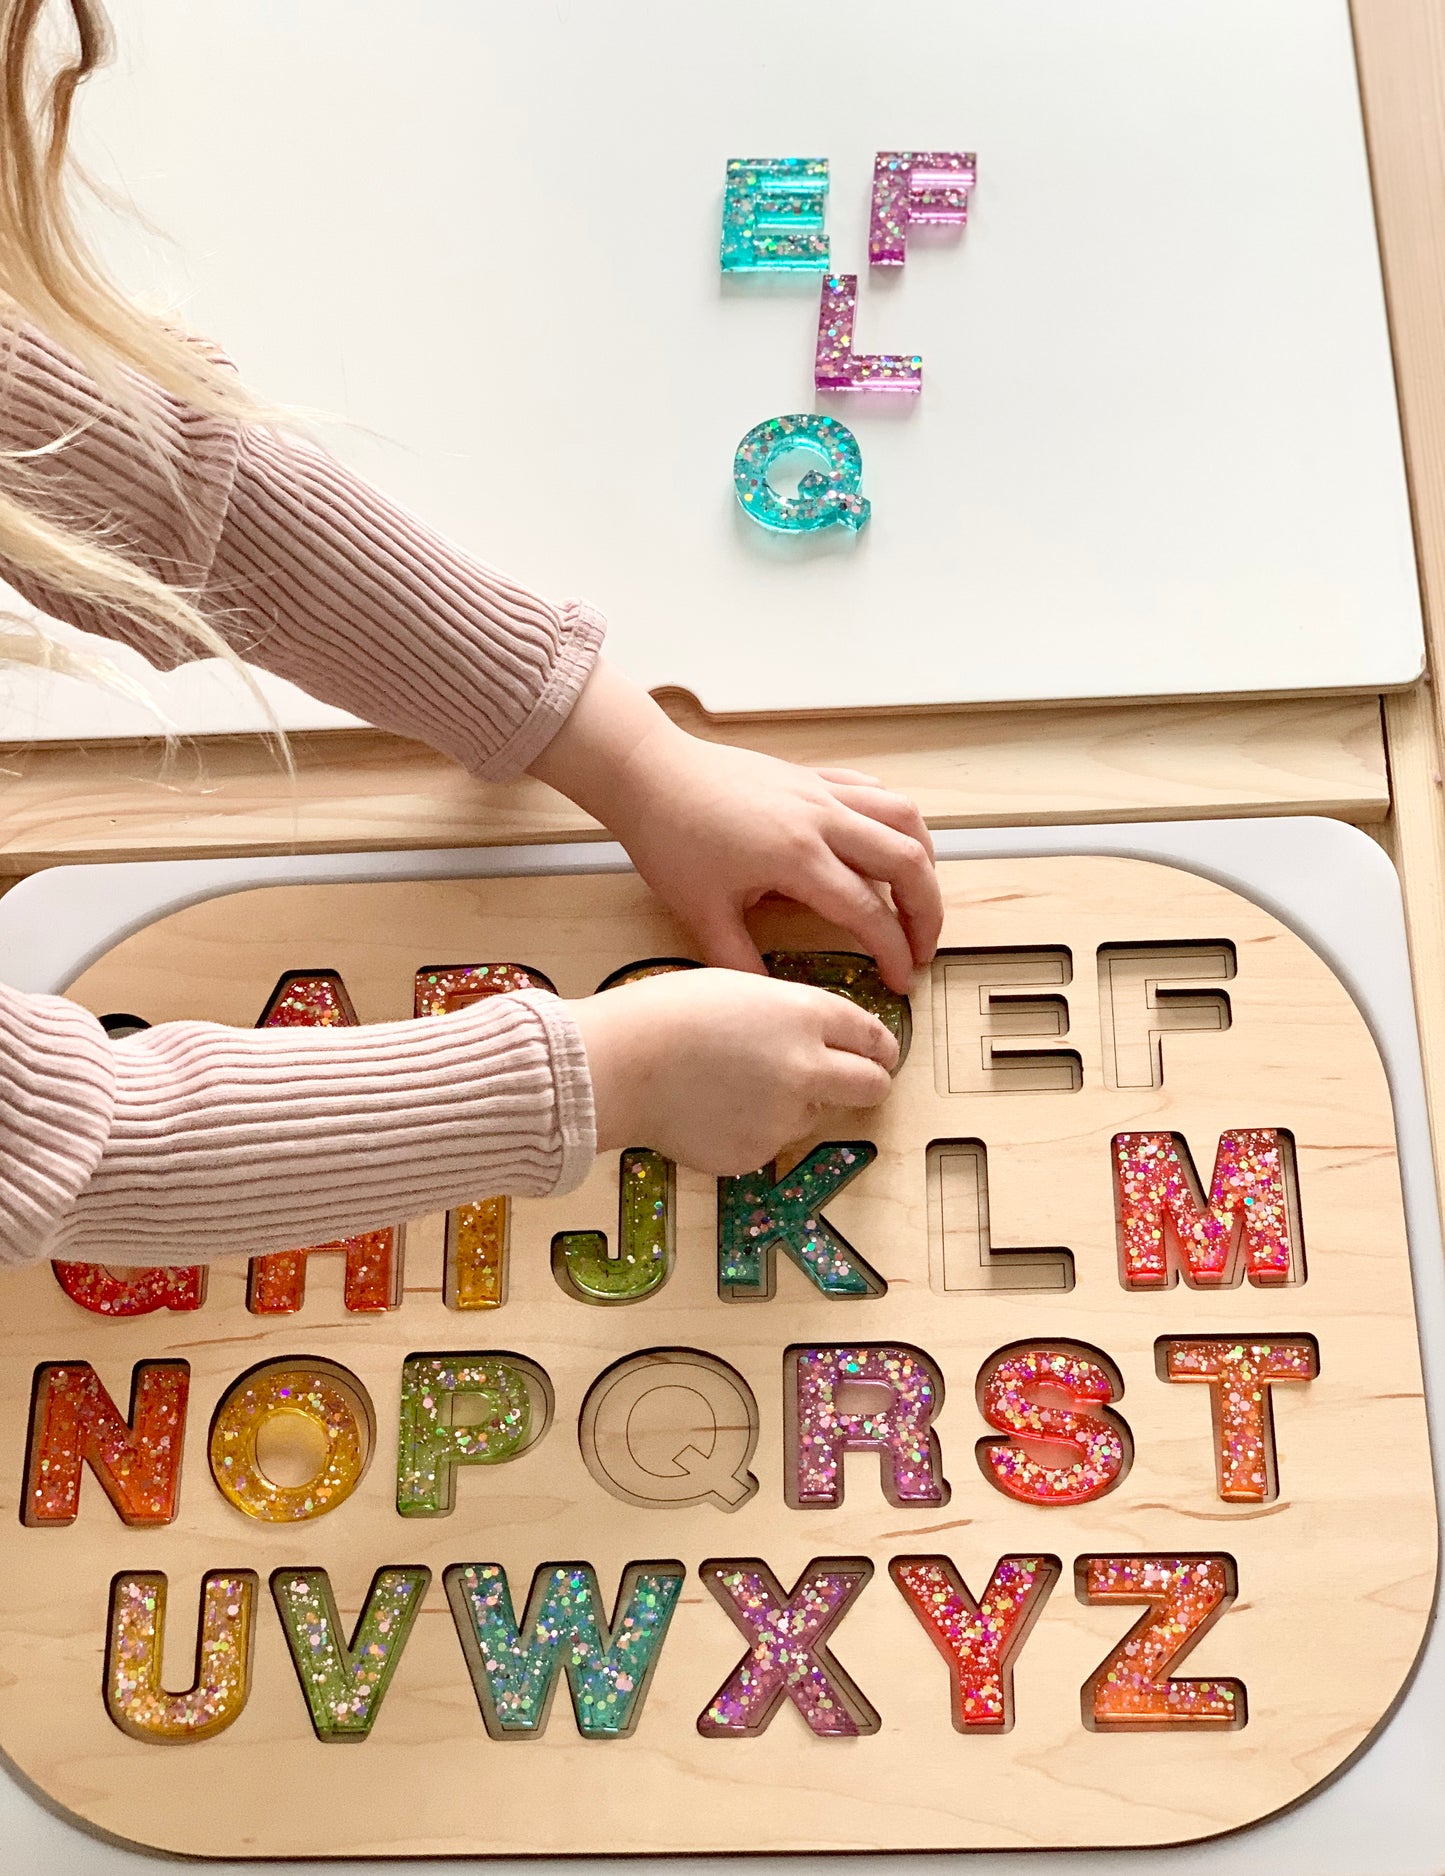 Uppercase Alphabet Puzzle Flisat Table Top Insert • Resin Letter Board